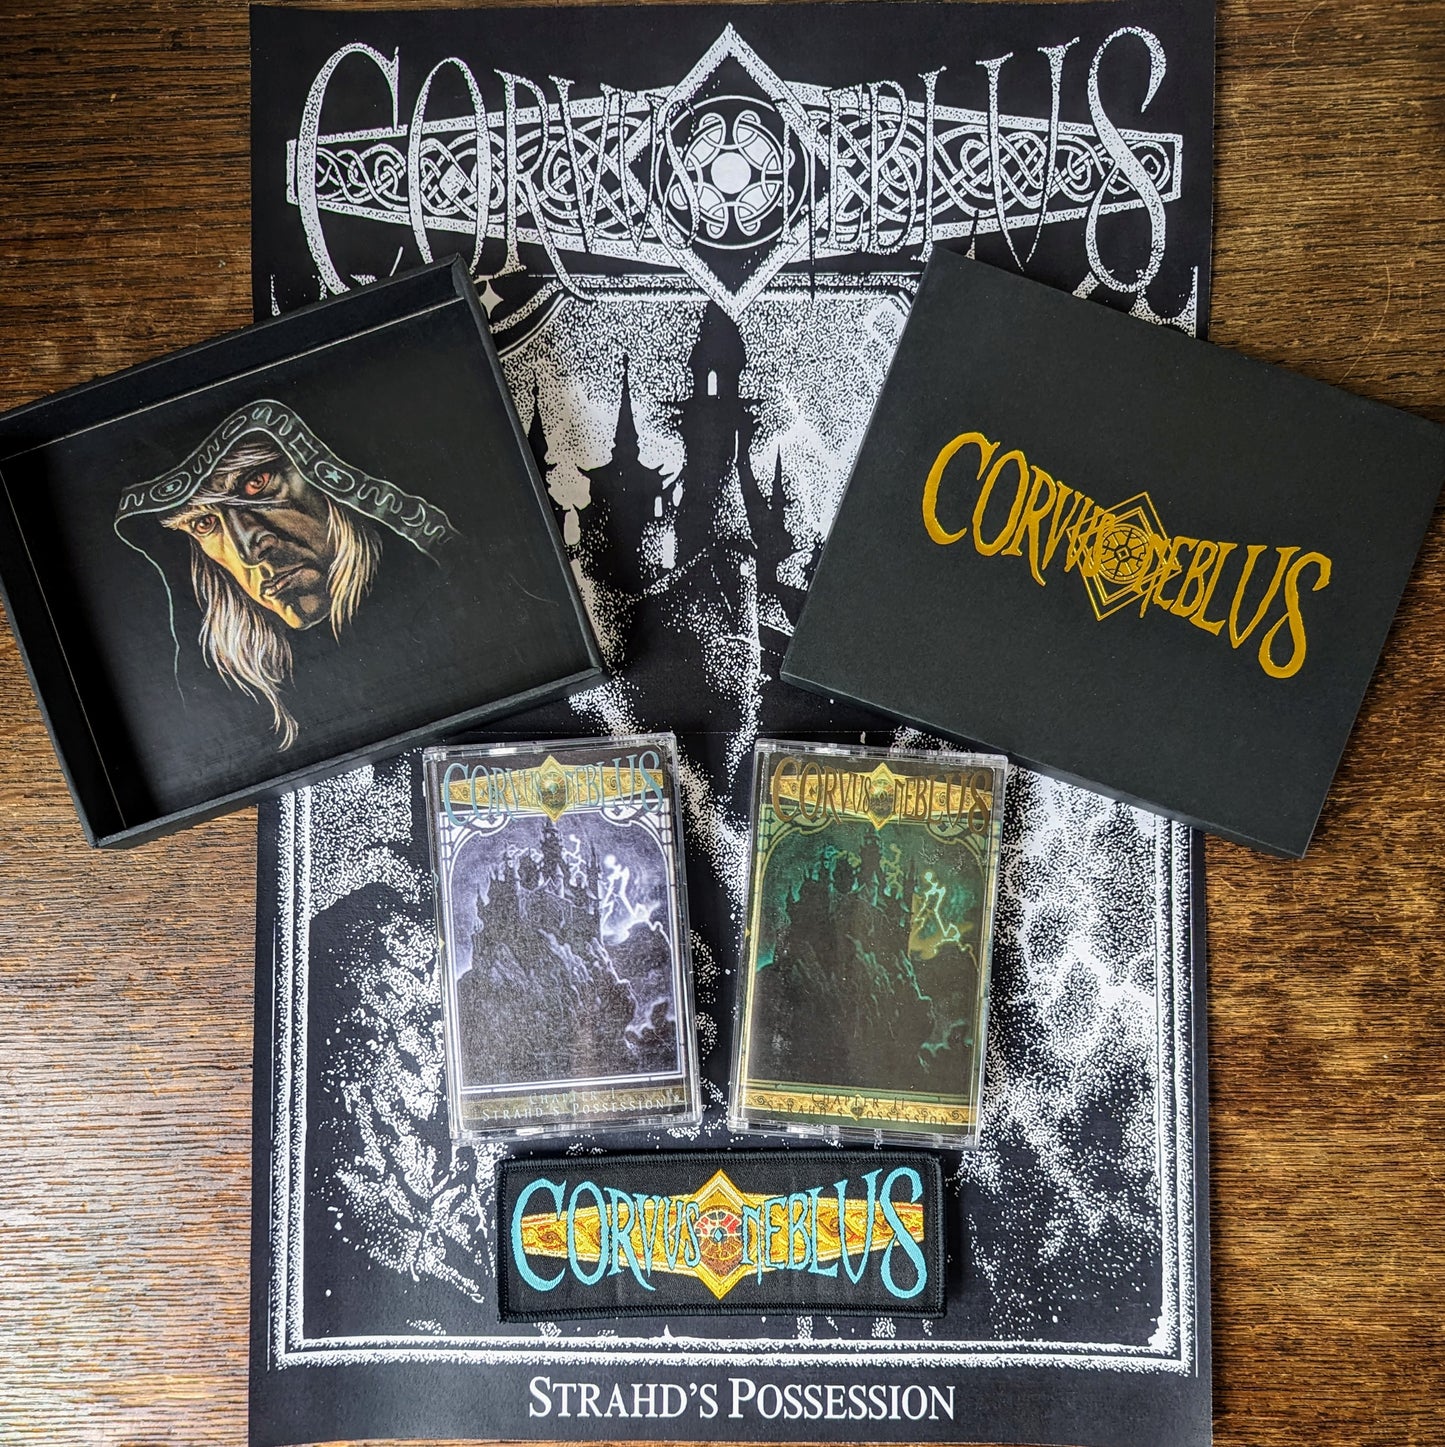 Corvus Neblus - Strahd's Possession 2xCassette Tape Box Set